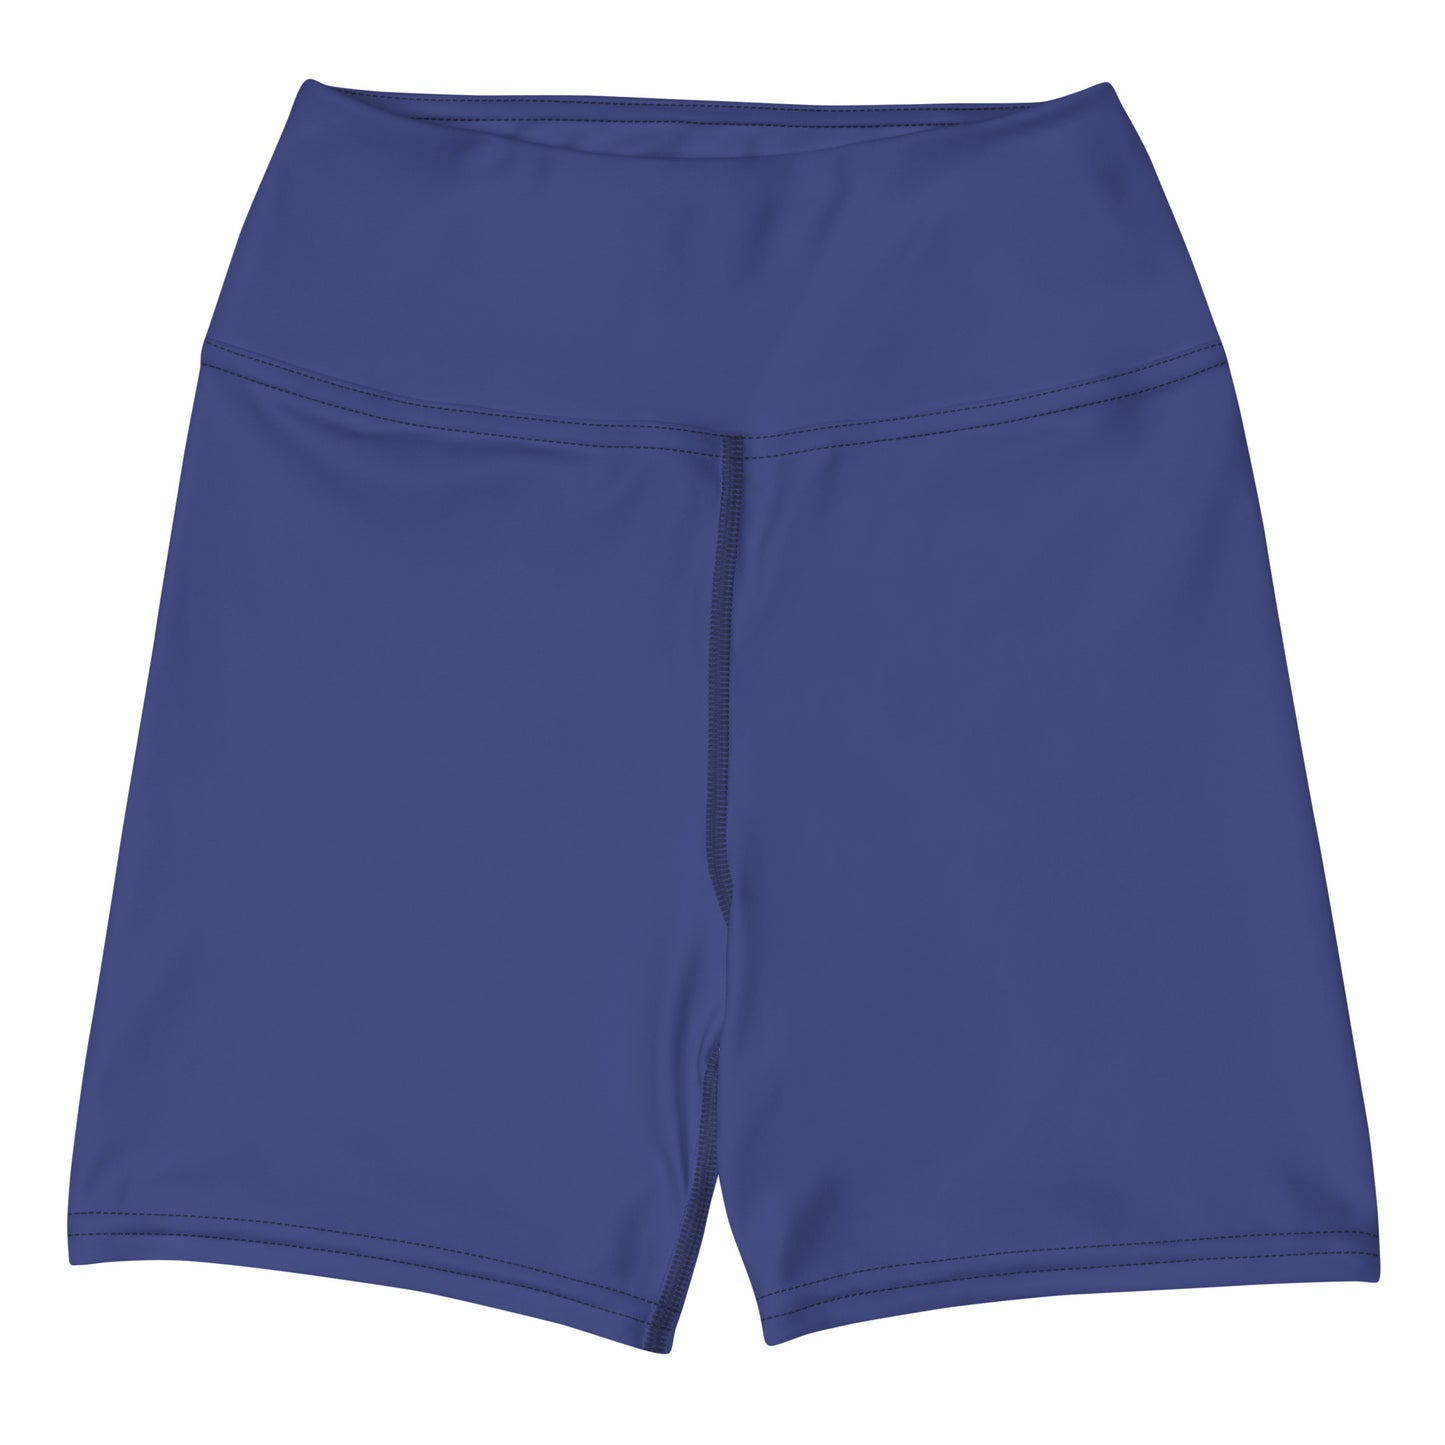 Monopoli Solid Blue High Waist Yoga Shorts / Bike Shorts with Inside Pocket